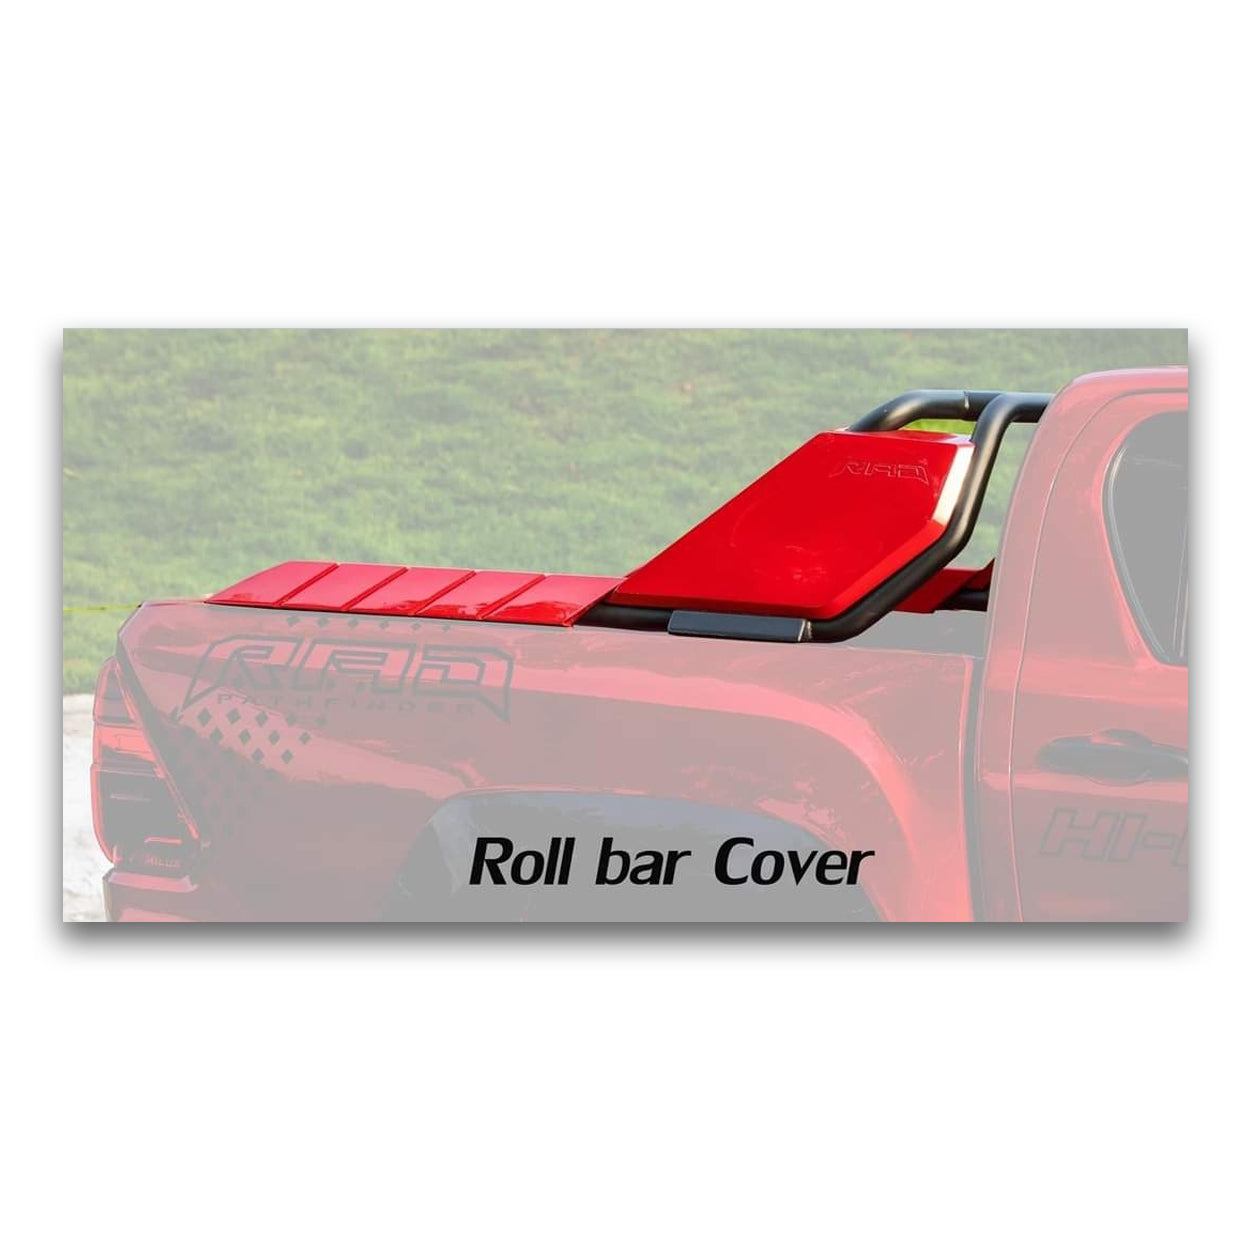 Rad Pathfinder Rollbar Cover